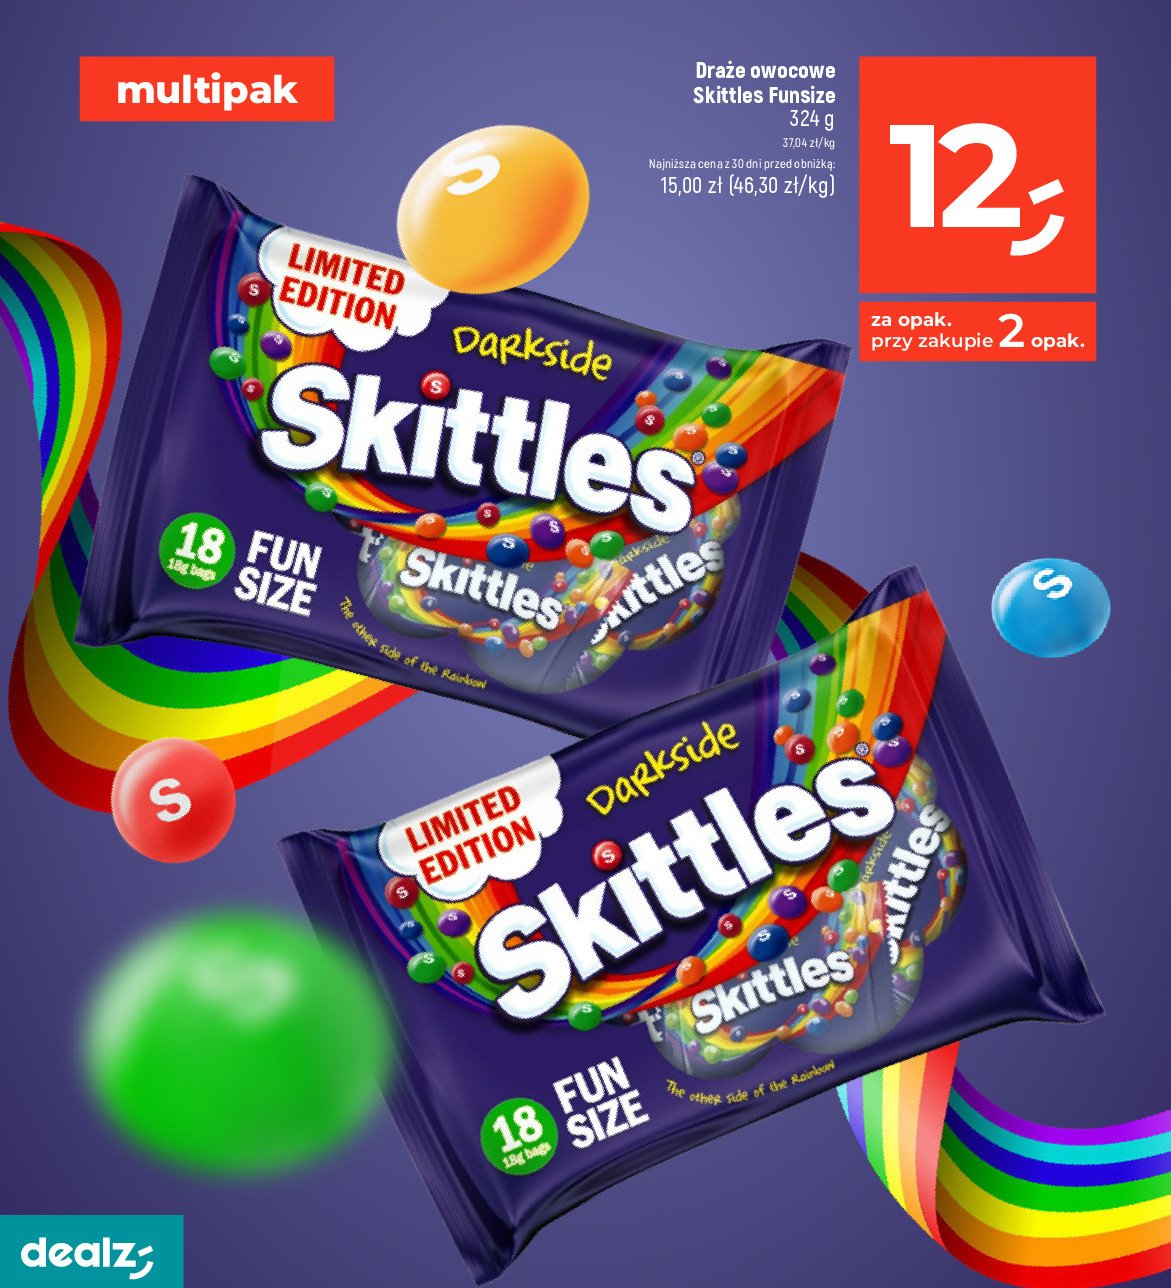 Cukierki darkside Skittles promocja